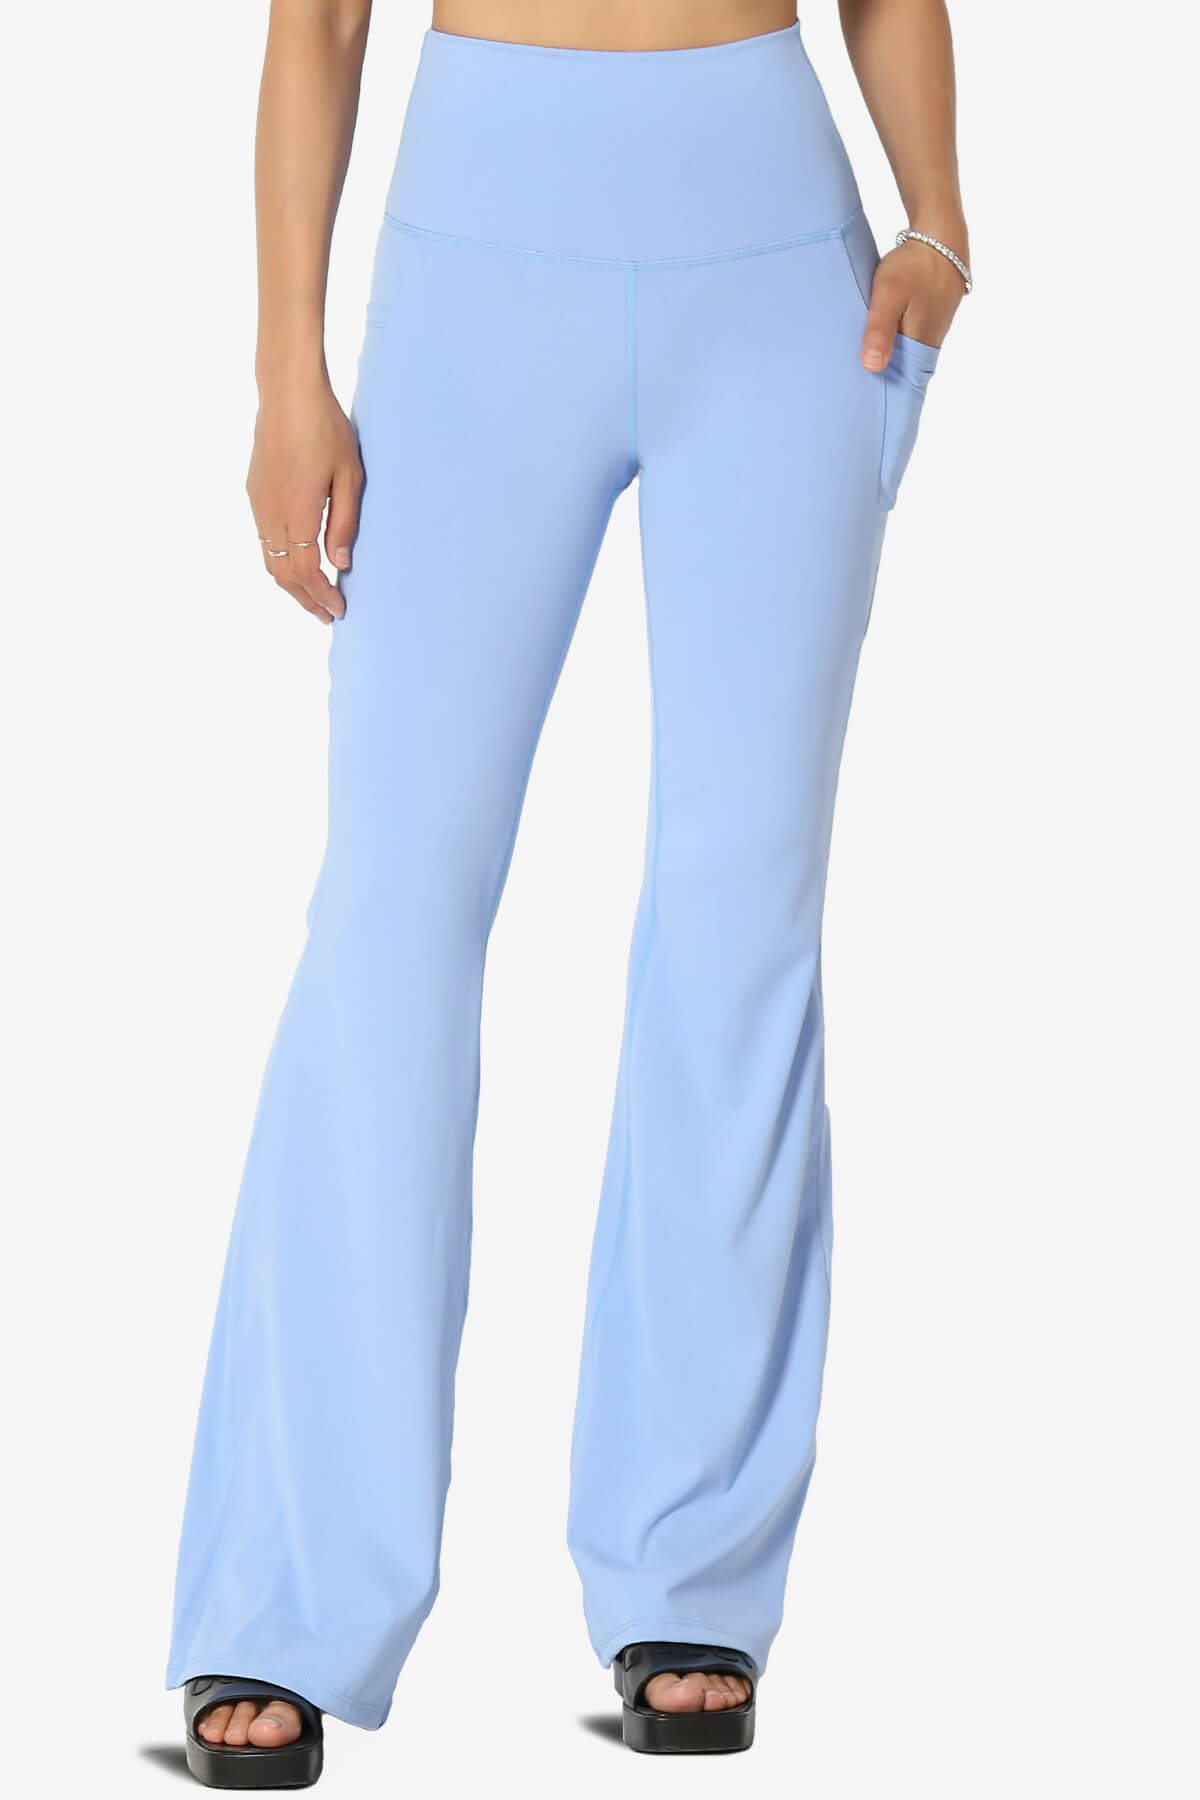 Gemma Athletic Pocket Flare Yoga Pants CREAM BLUE_3